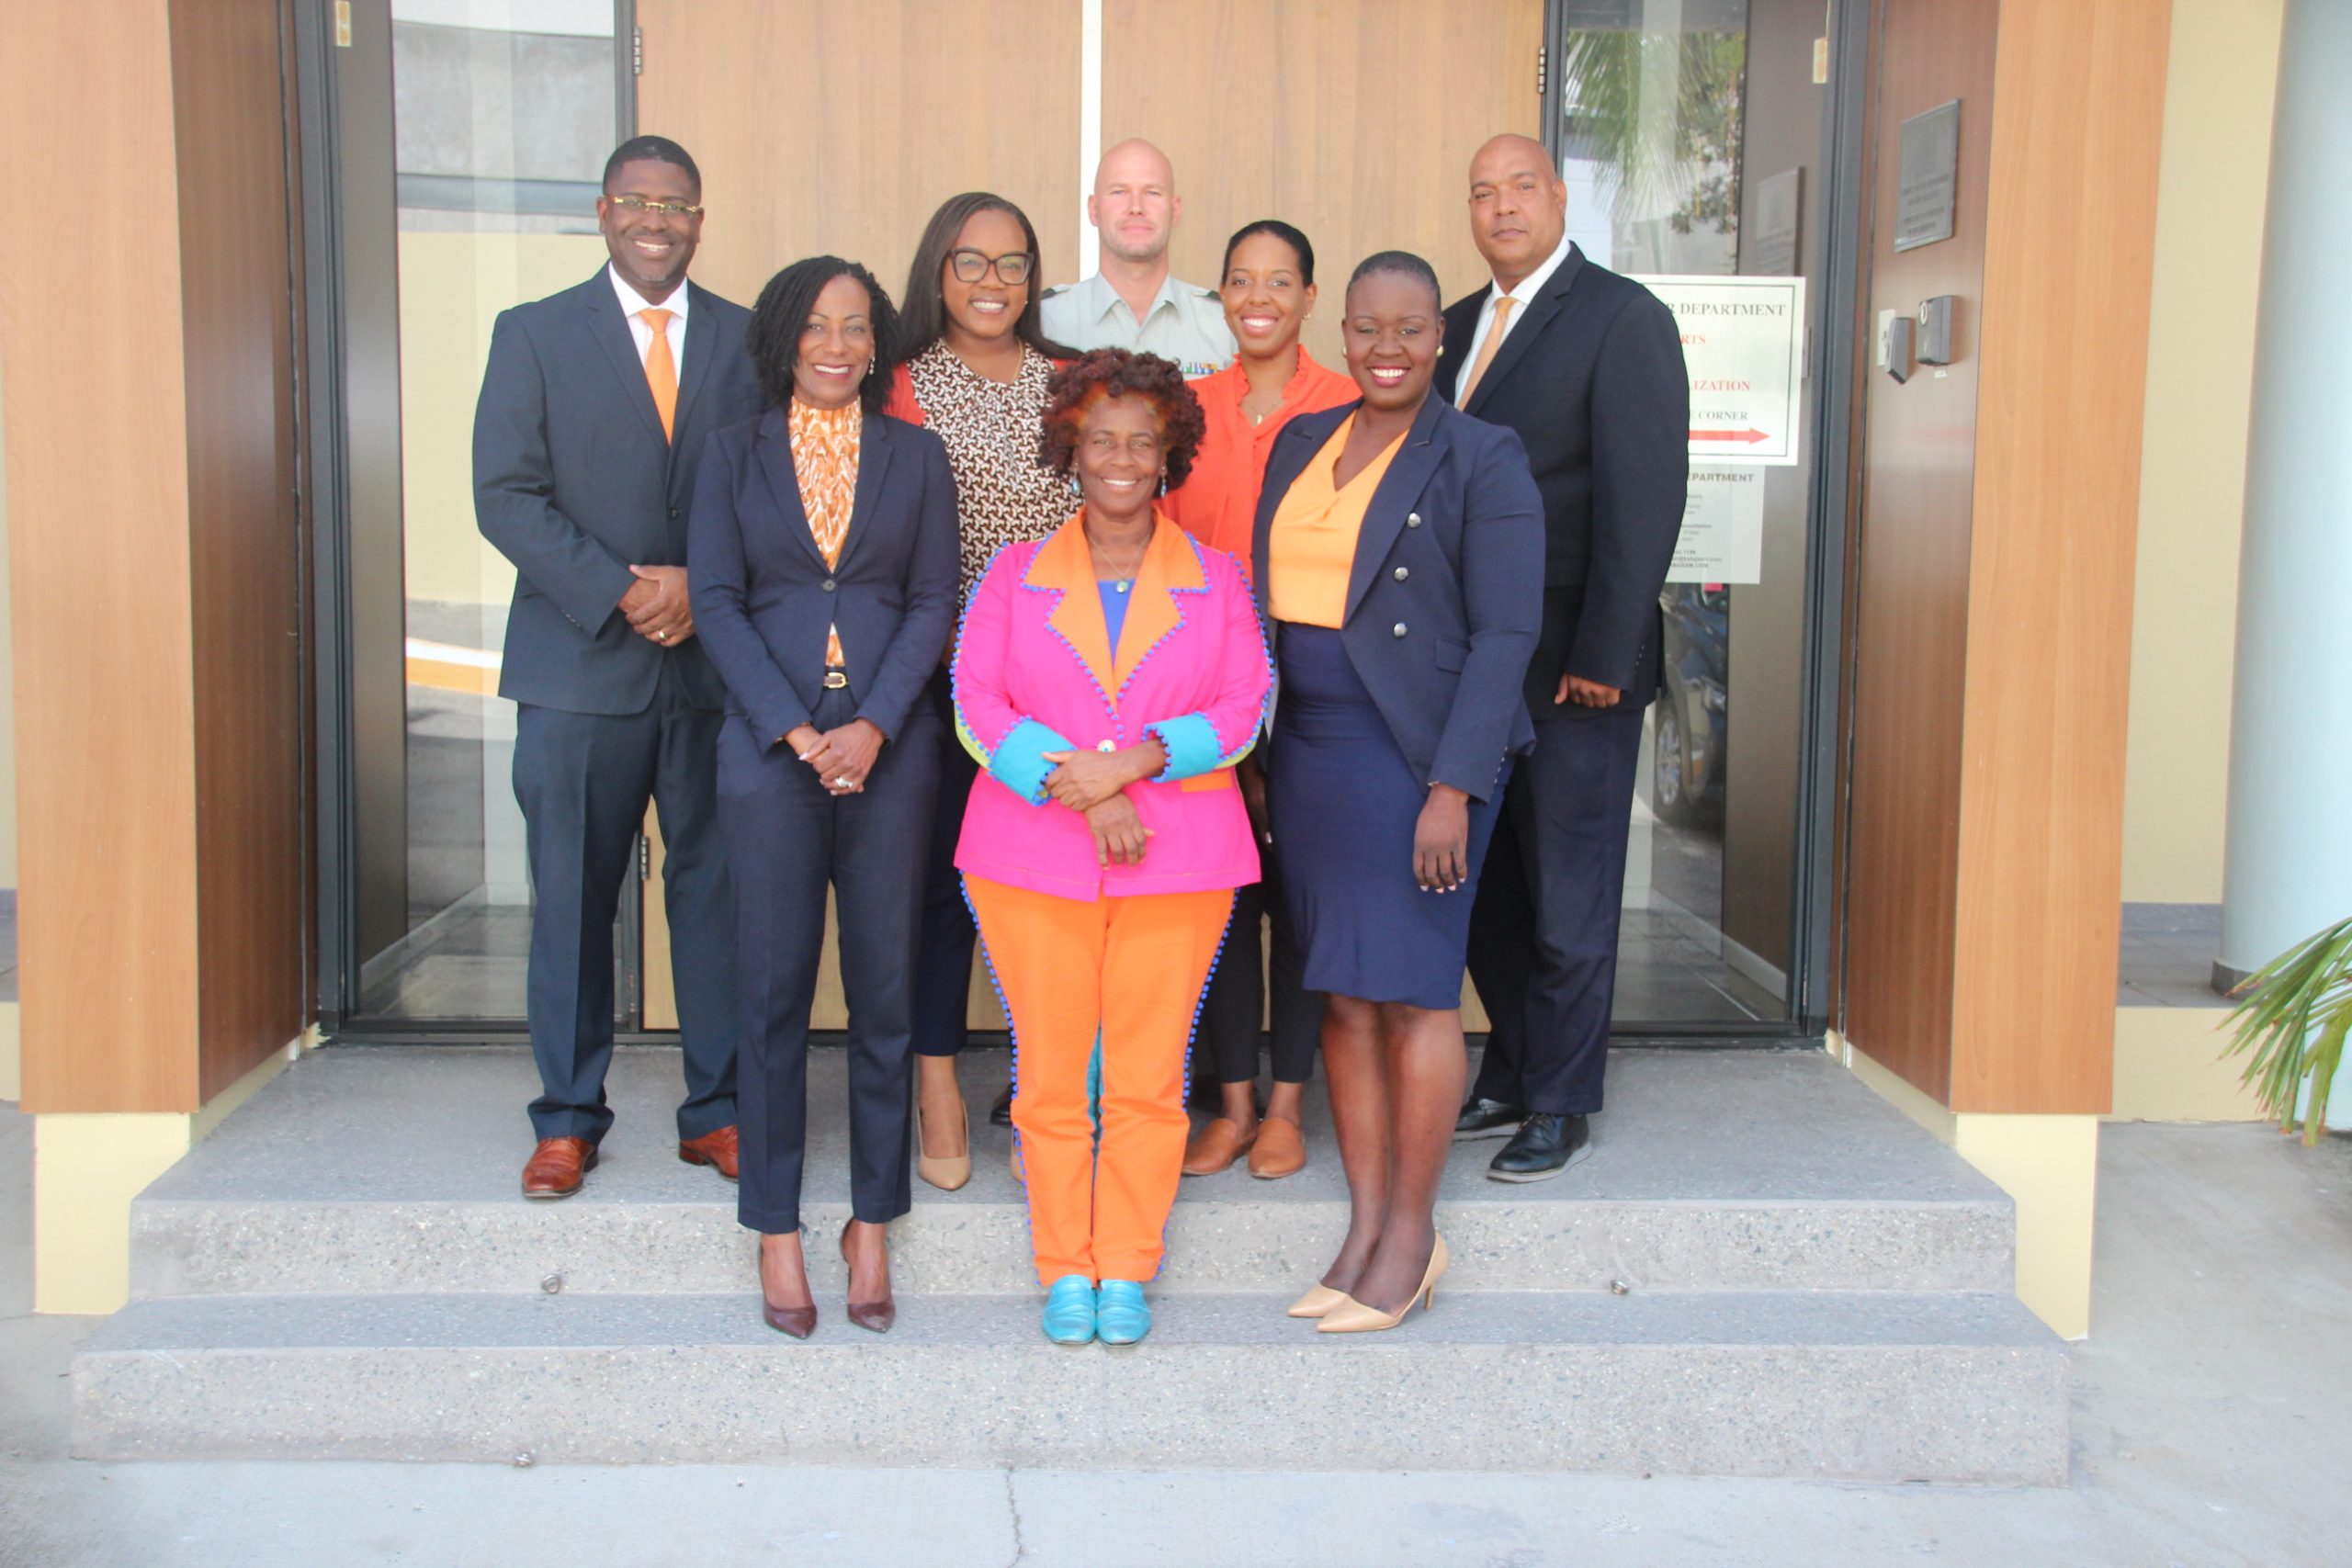 “10 th Annual Governor’s Symposium on the Orange Economy Speakers Announced”